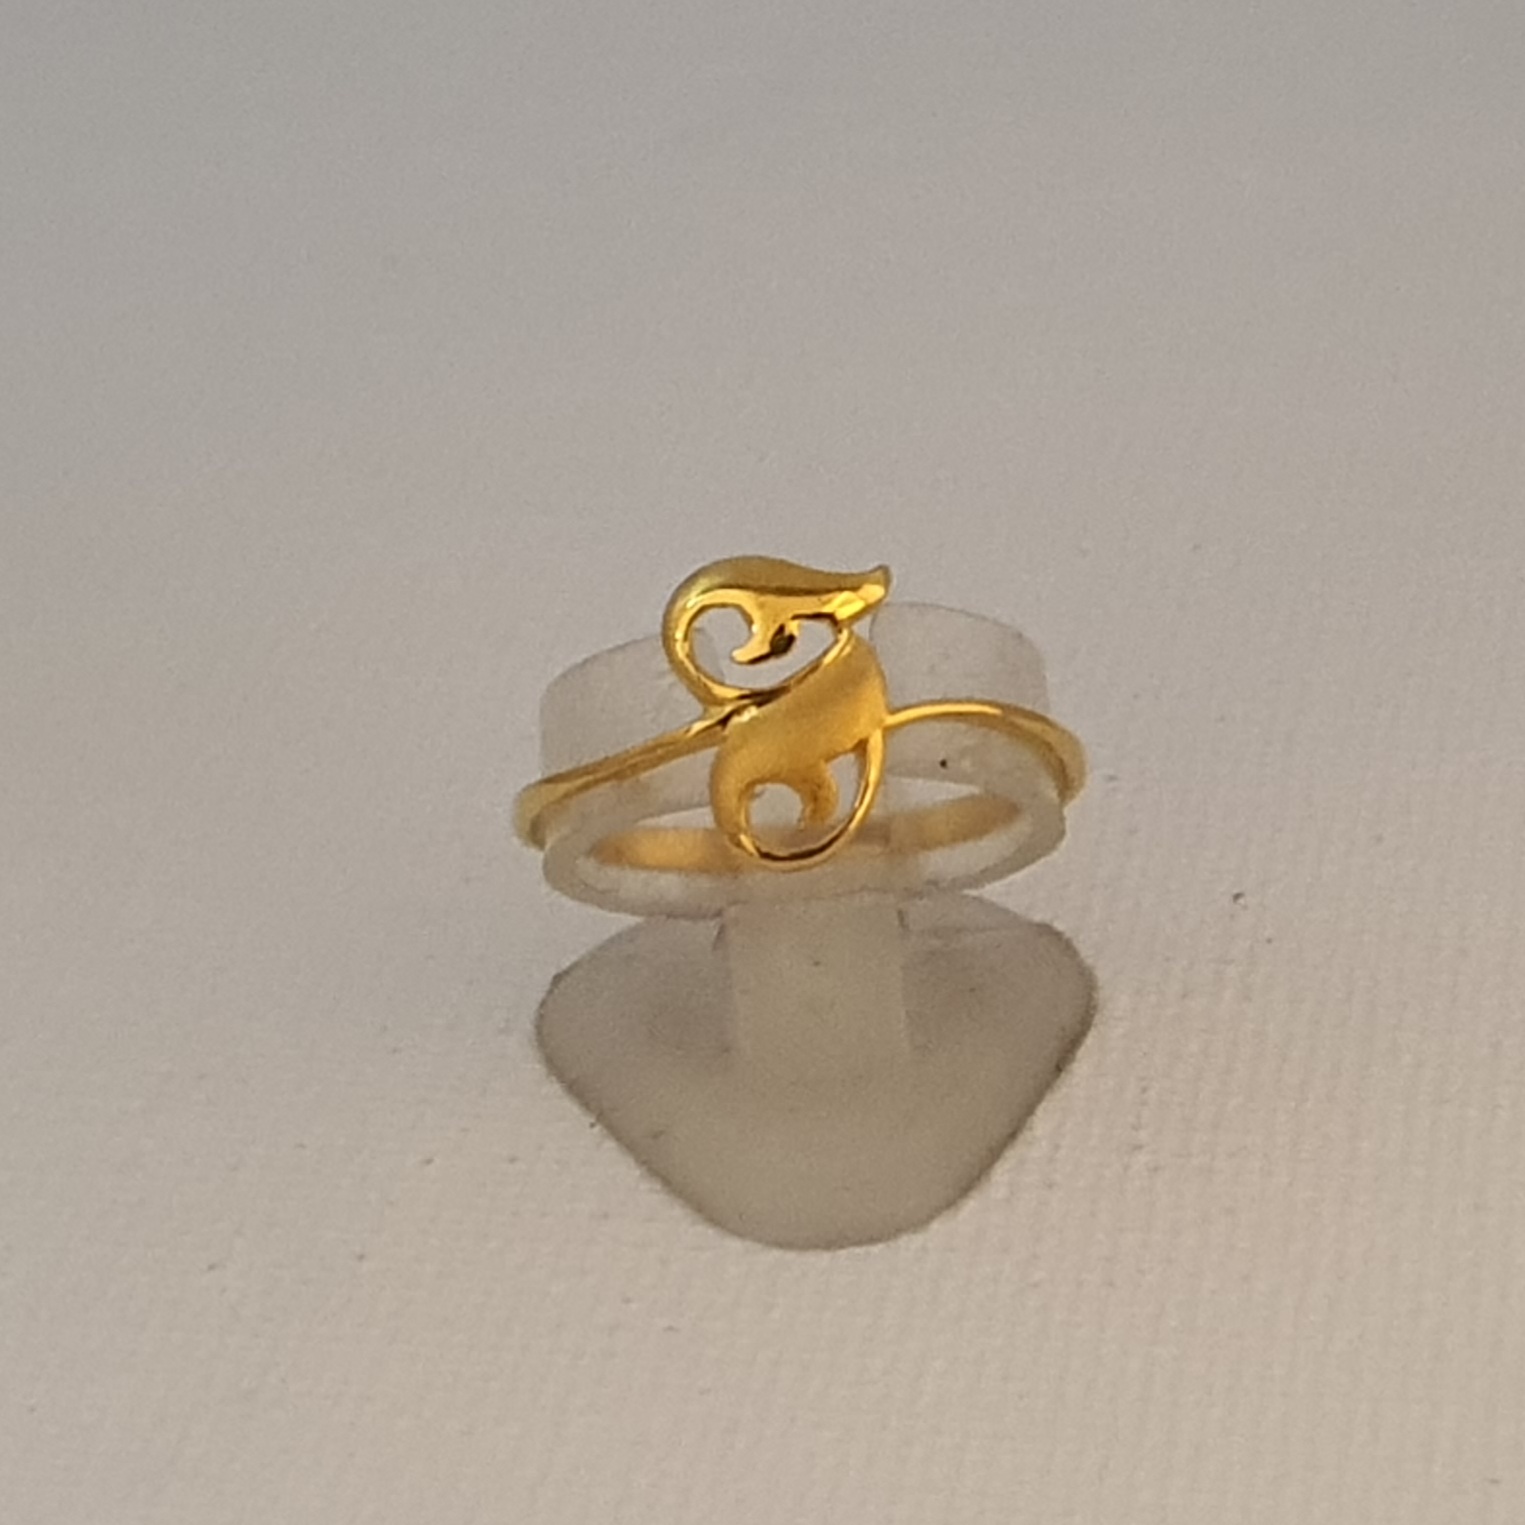 Latest 1 gram gold Ring design || Razik jewelleries | Latest ring designs,  Ring designs, Gold ring designs